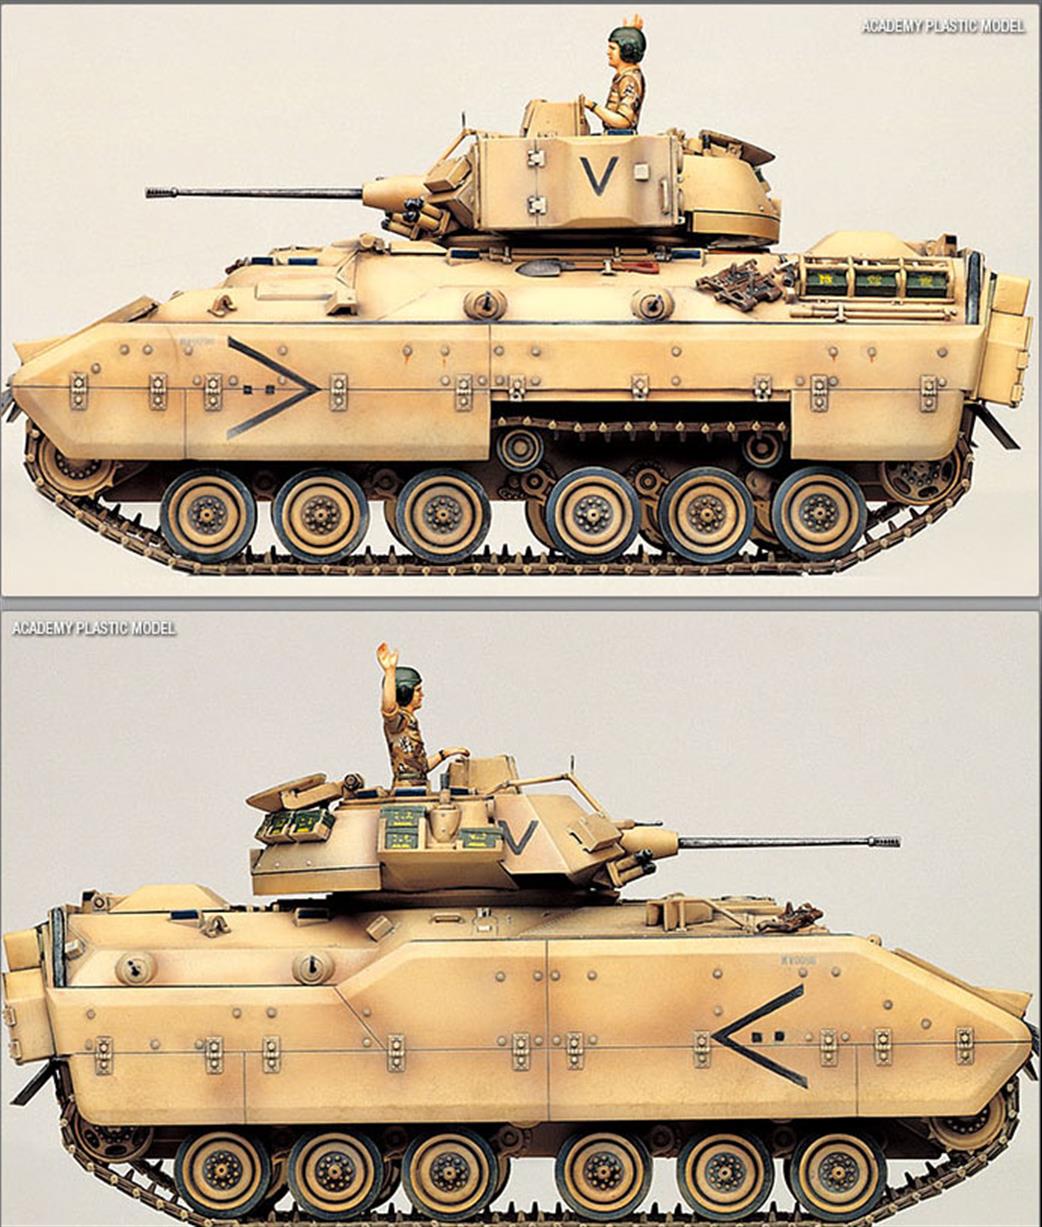 Academy 1/35 13237 M2 Bradley Infantry Fighting Vehicle